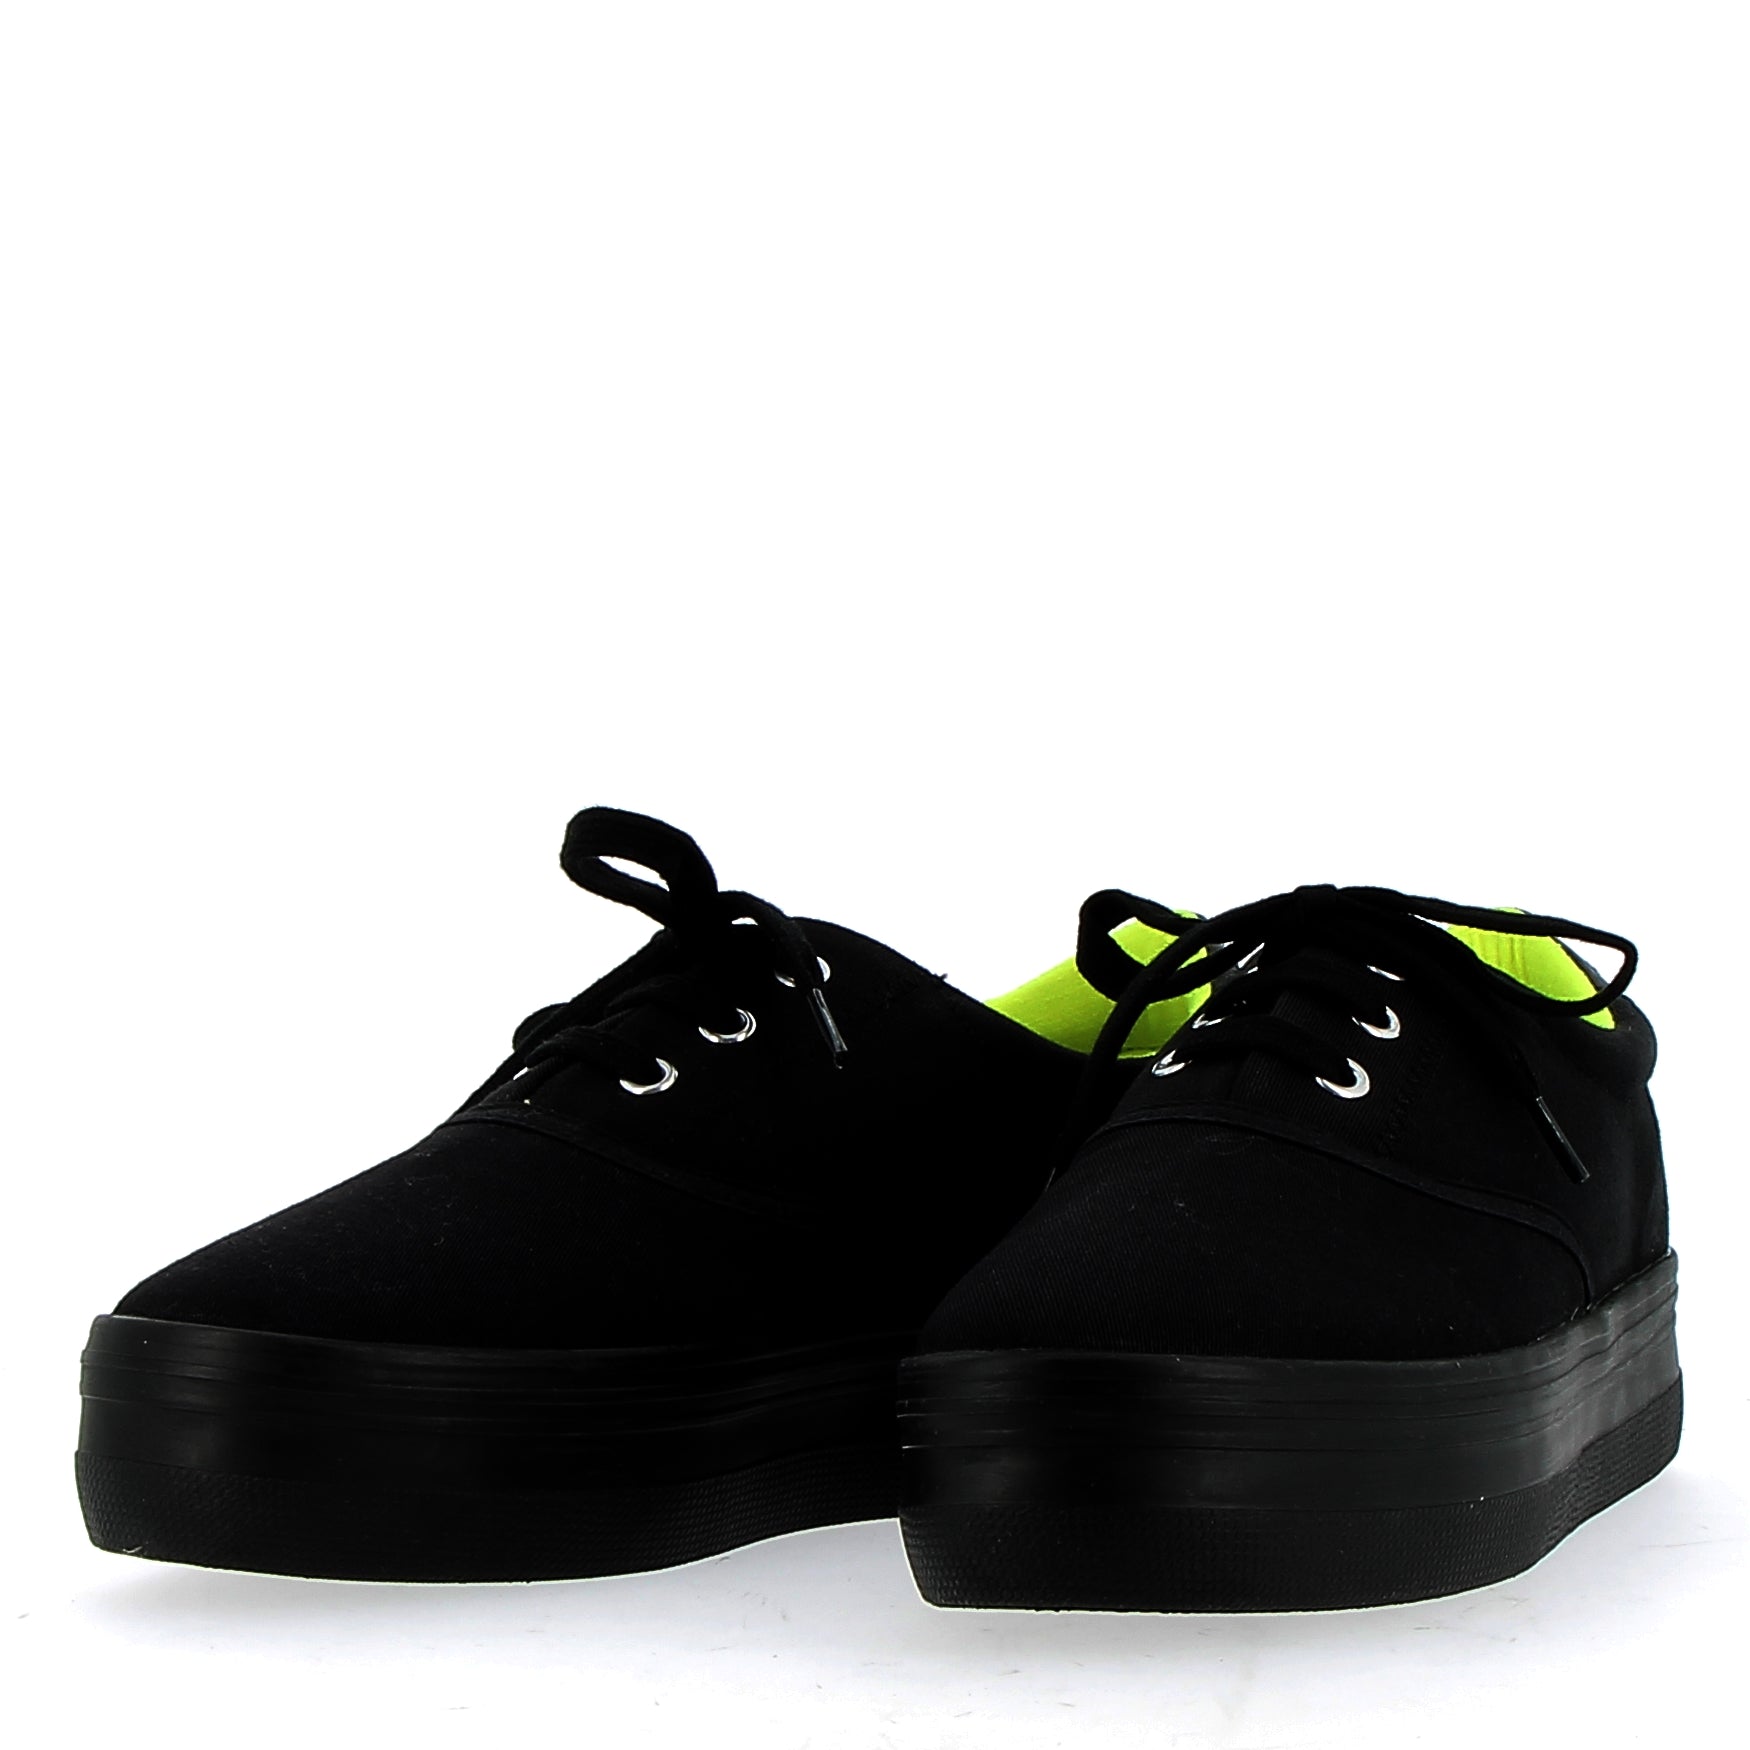 Black sneaker with internal fluo